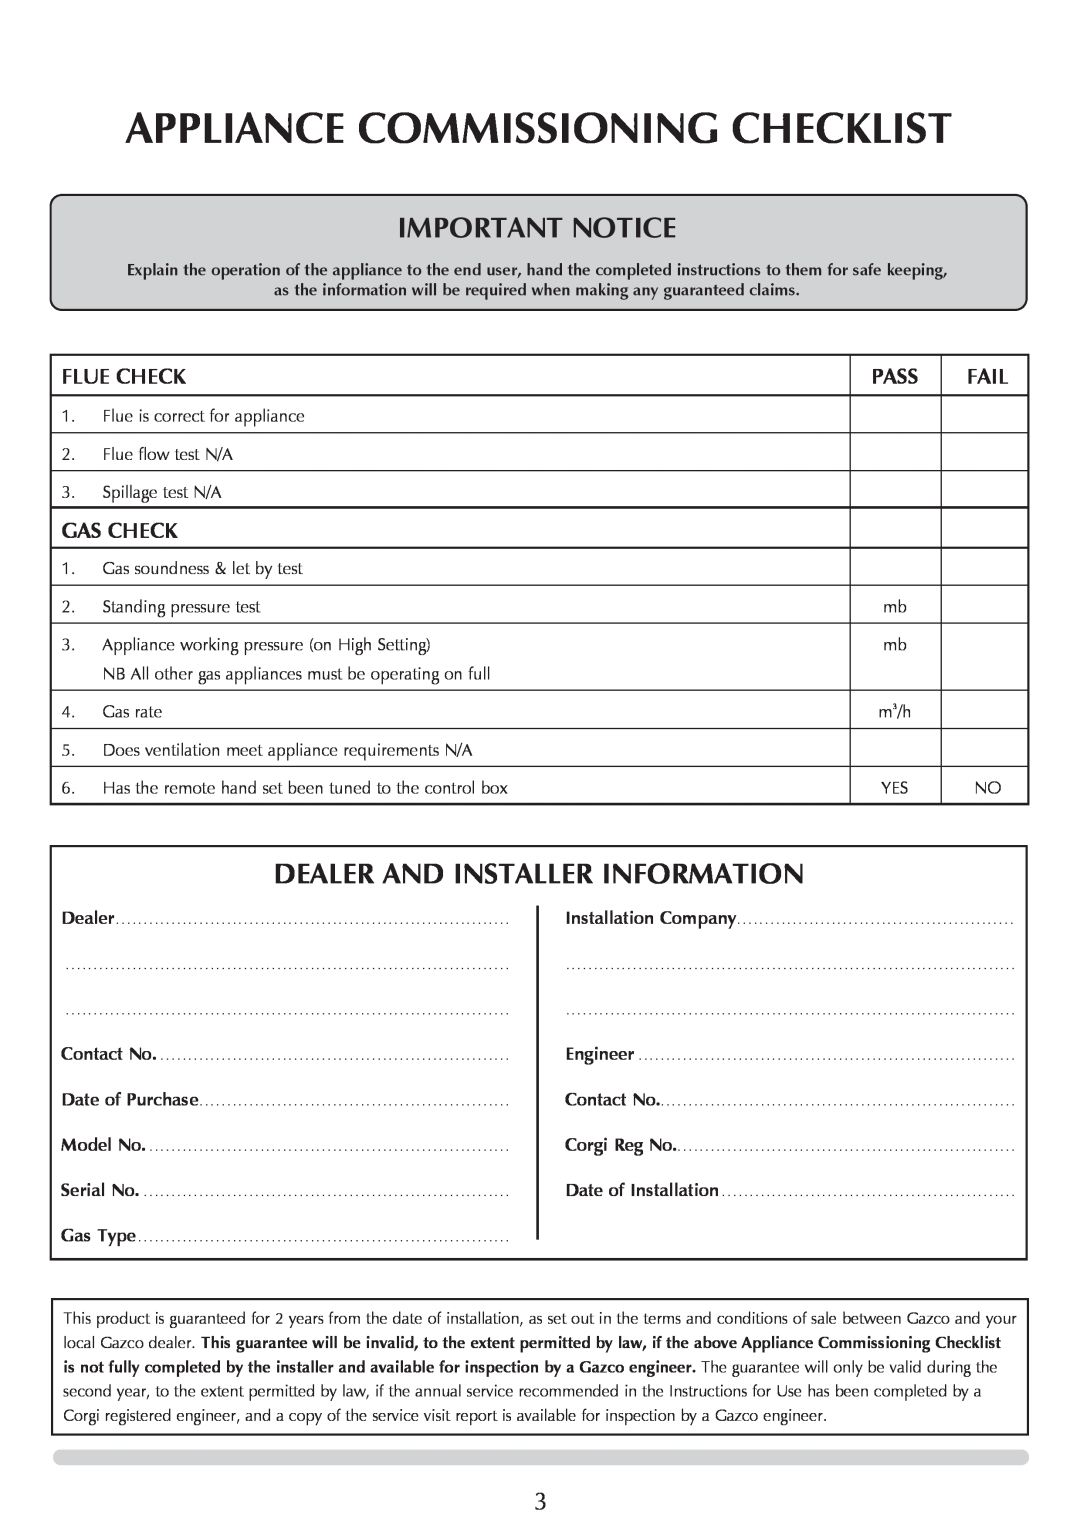 Stovax GAZCO Linea Balanced Flue Convector Fire manual Appliance Commissioning Checklist, Flue Check, Pass, Fail, Gas Check 